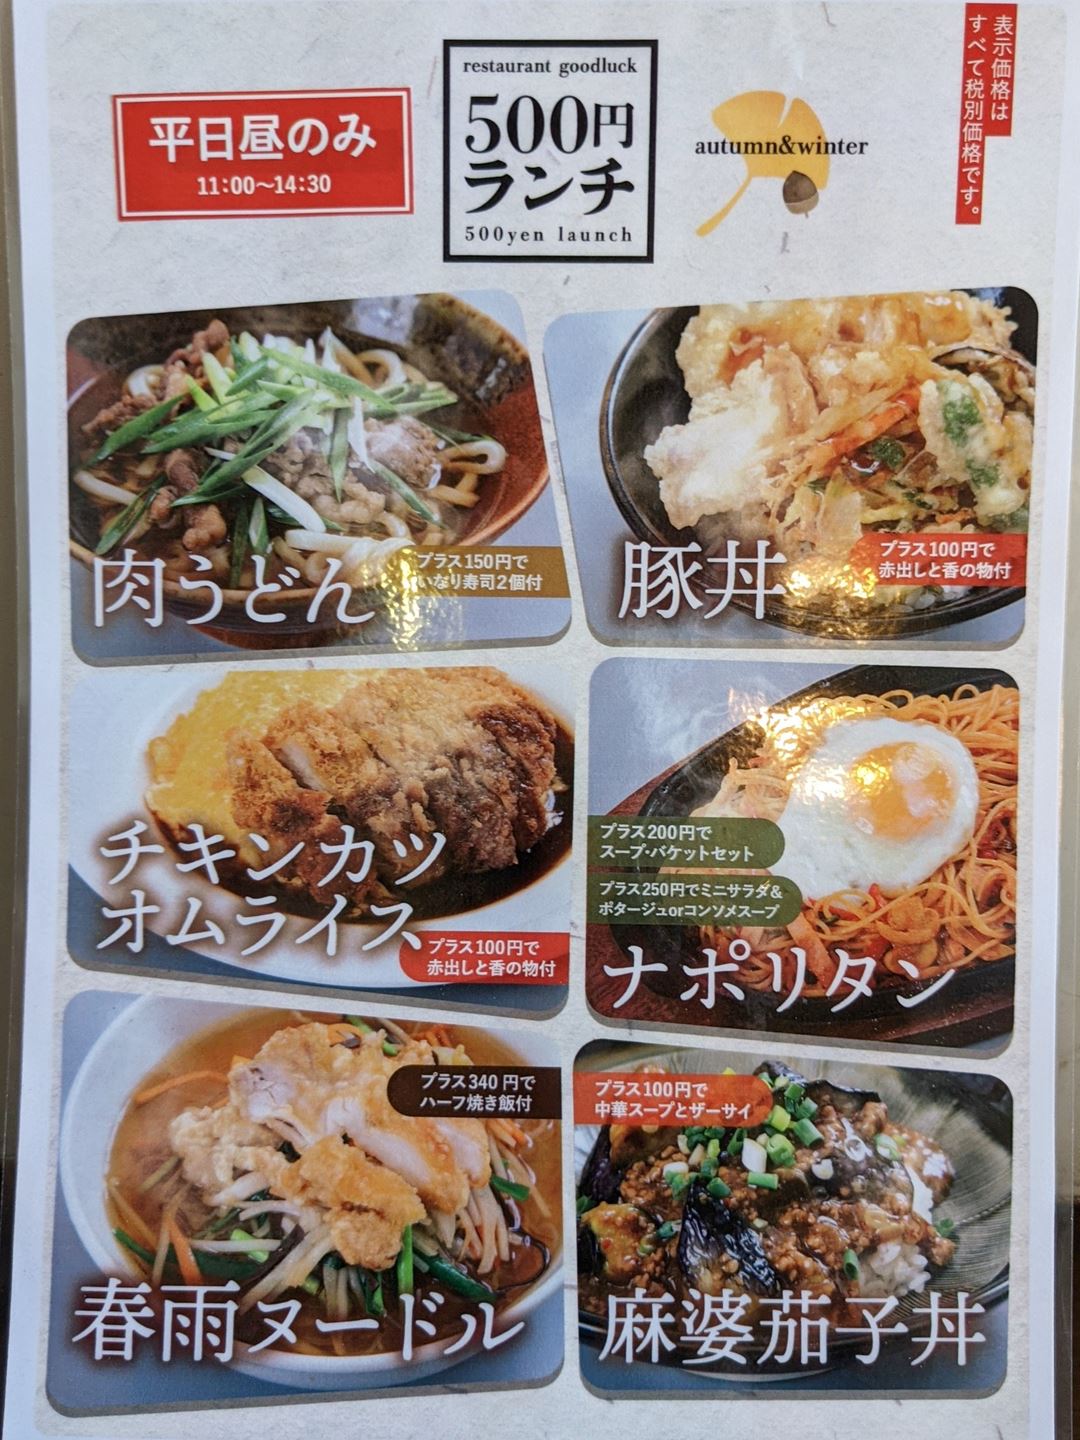 500 Yen Lunch in Autumn Winter 2020 2021 秋冬500円ランチ Restaurant Goodluck in Kochi 高知 レストラン グドラック